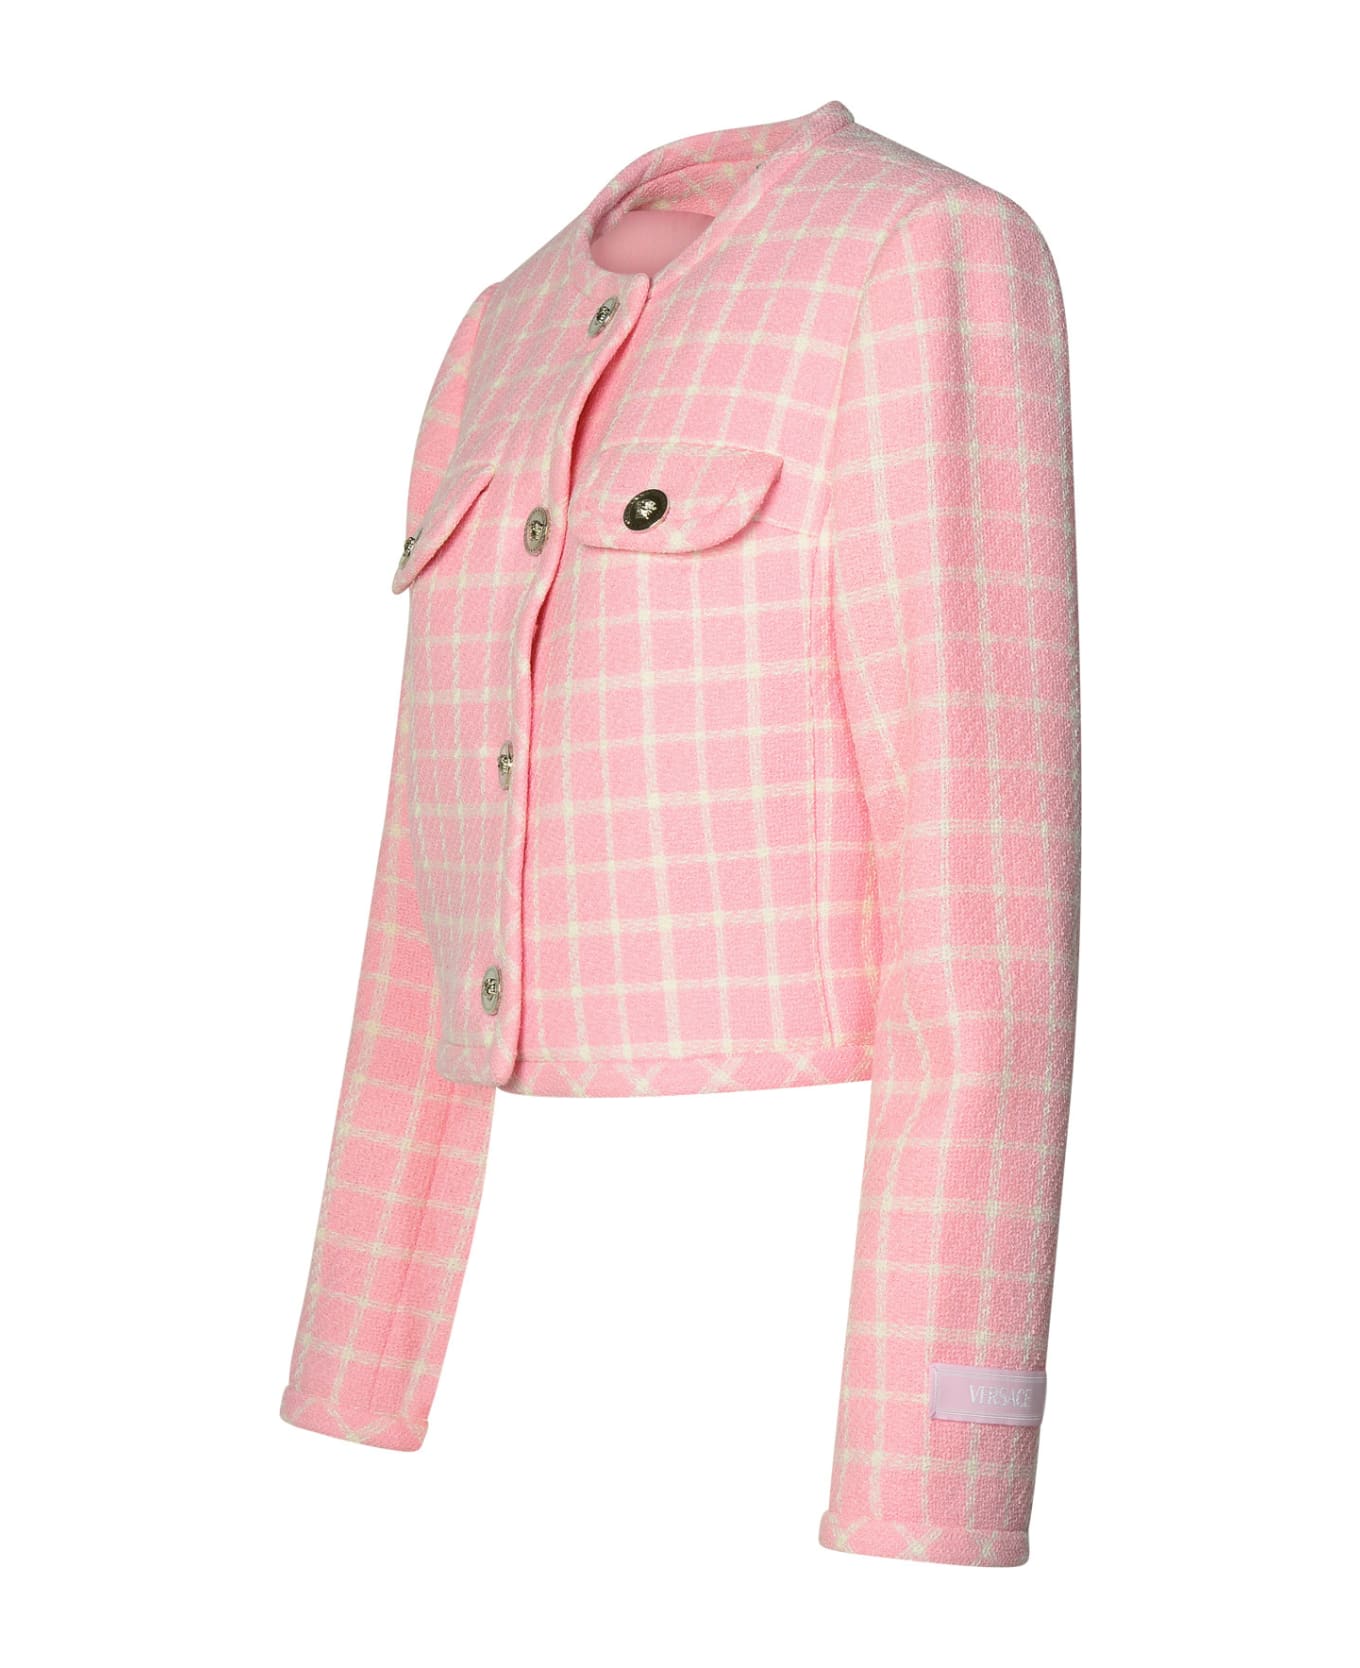 Versace Virgin Wool Blend Jacket - Pastel pink + white